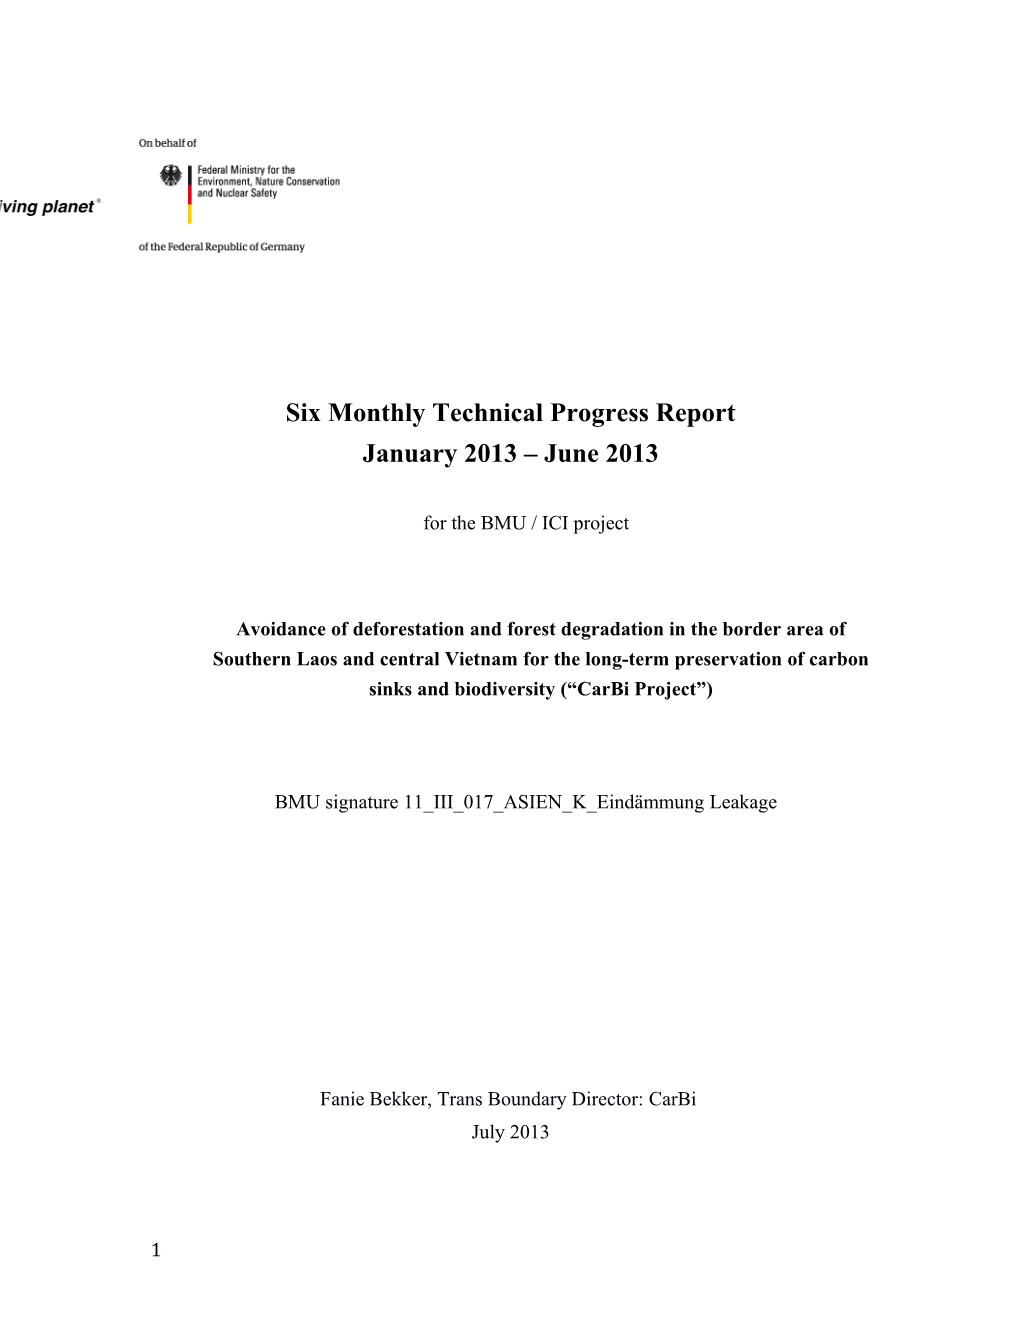 Six Monthly Technical Progress Report